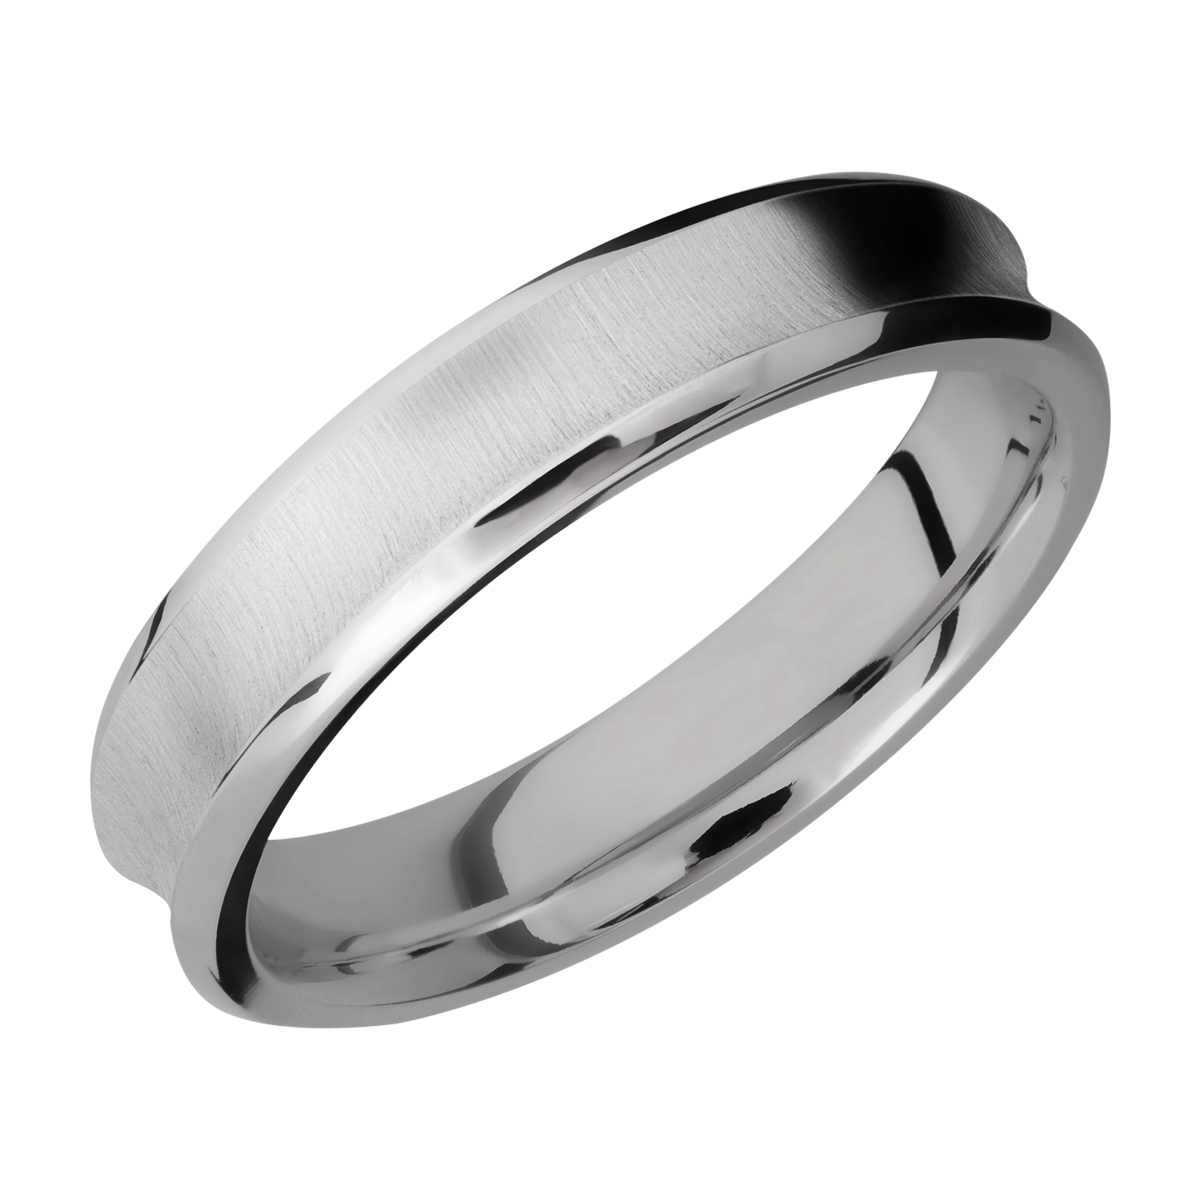 Lashbrook 5CB Titanium Wedding Ring or Band